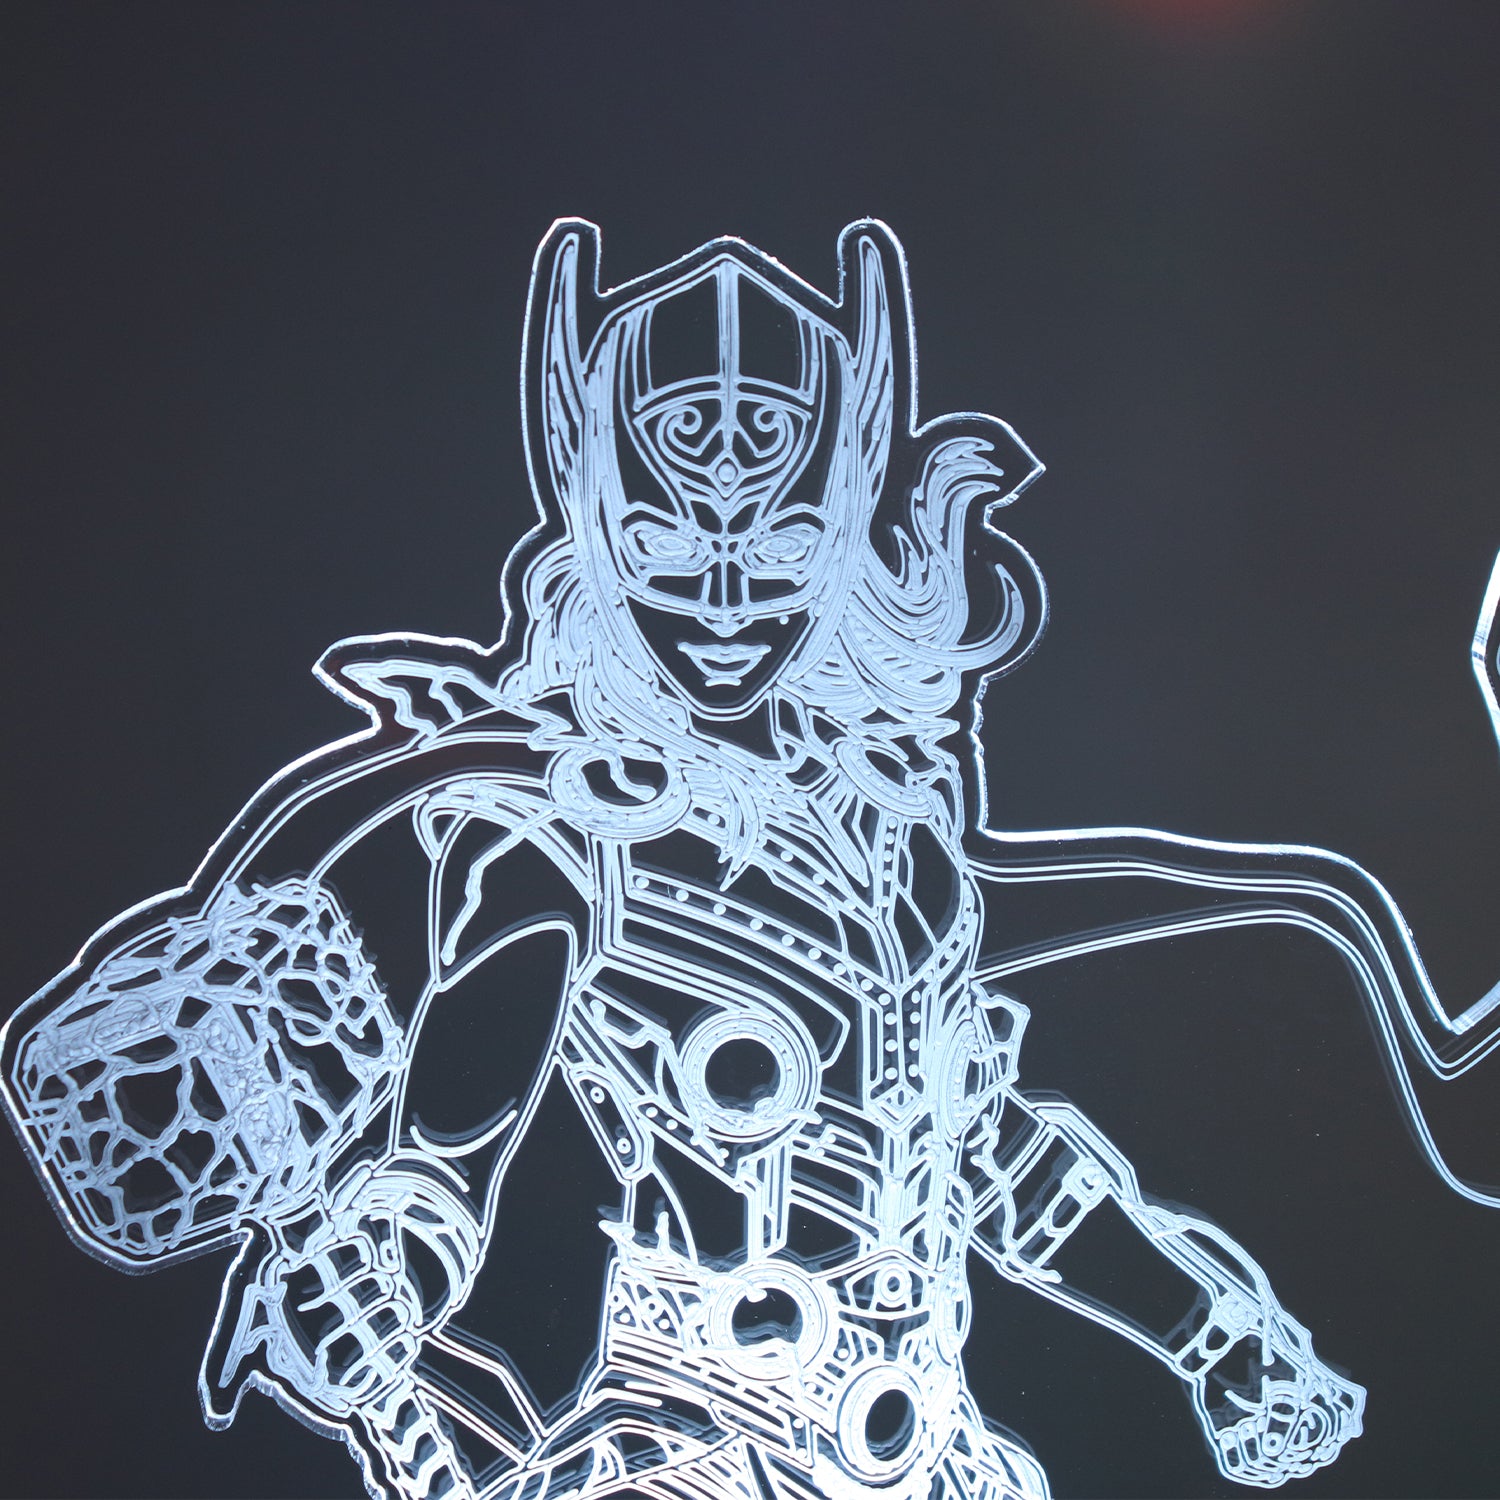 Marvel 3D RGB App Controlled USB LED Night Light Thor LAT version 2